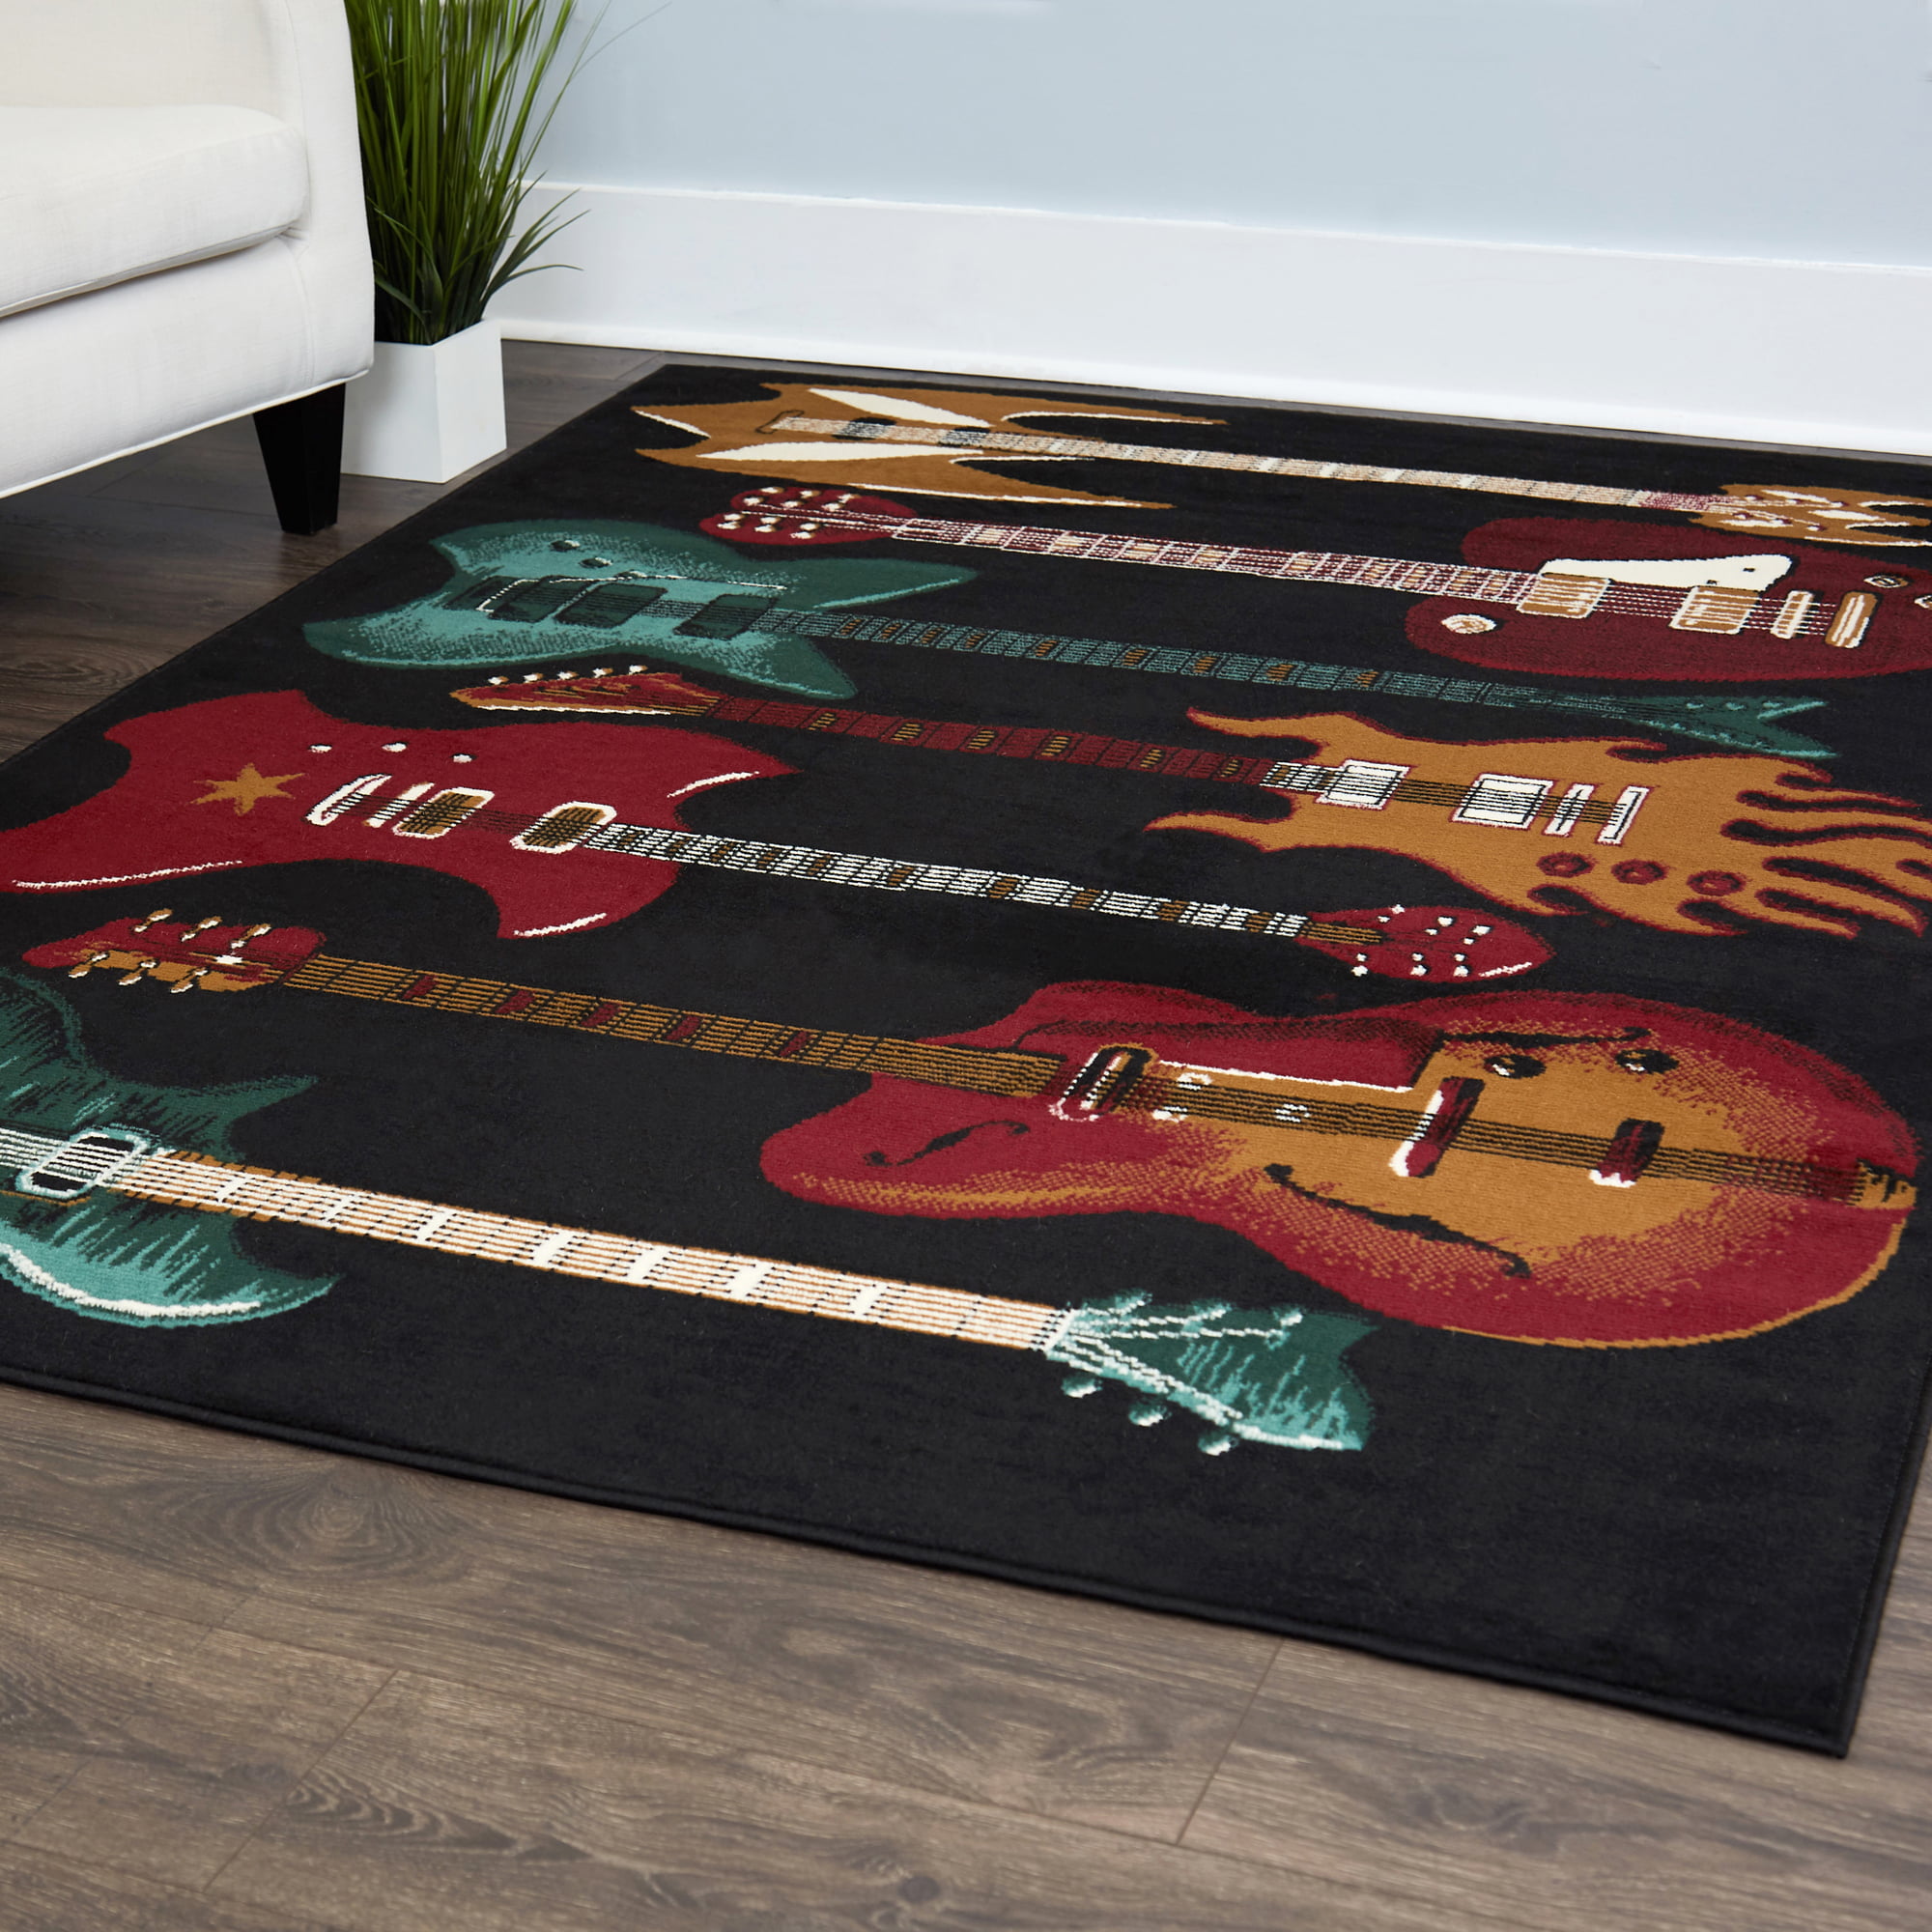 Brown And Black Guitar Area Rugs Dining Room Bedroom Floor Carpet Kitchen Mat 